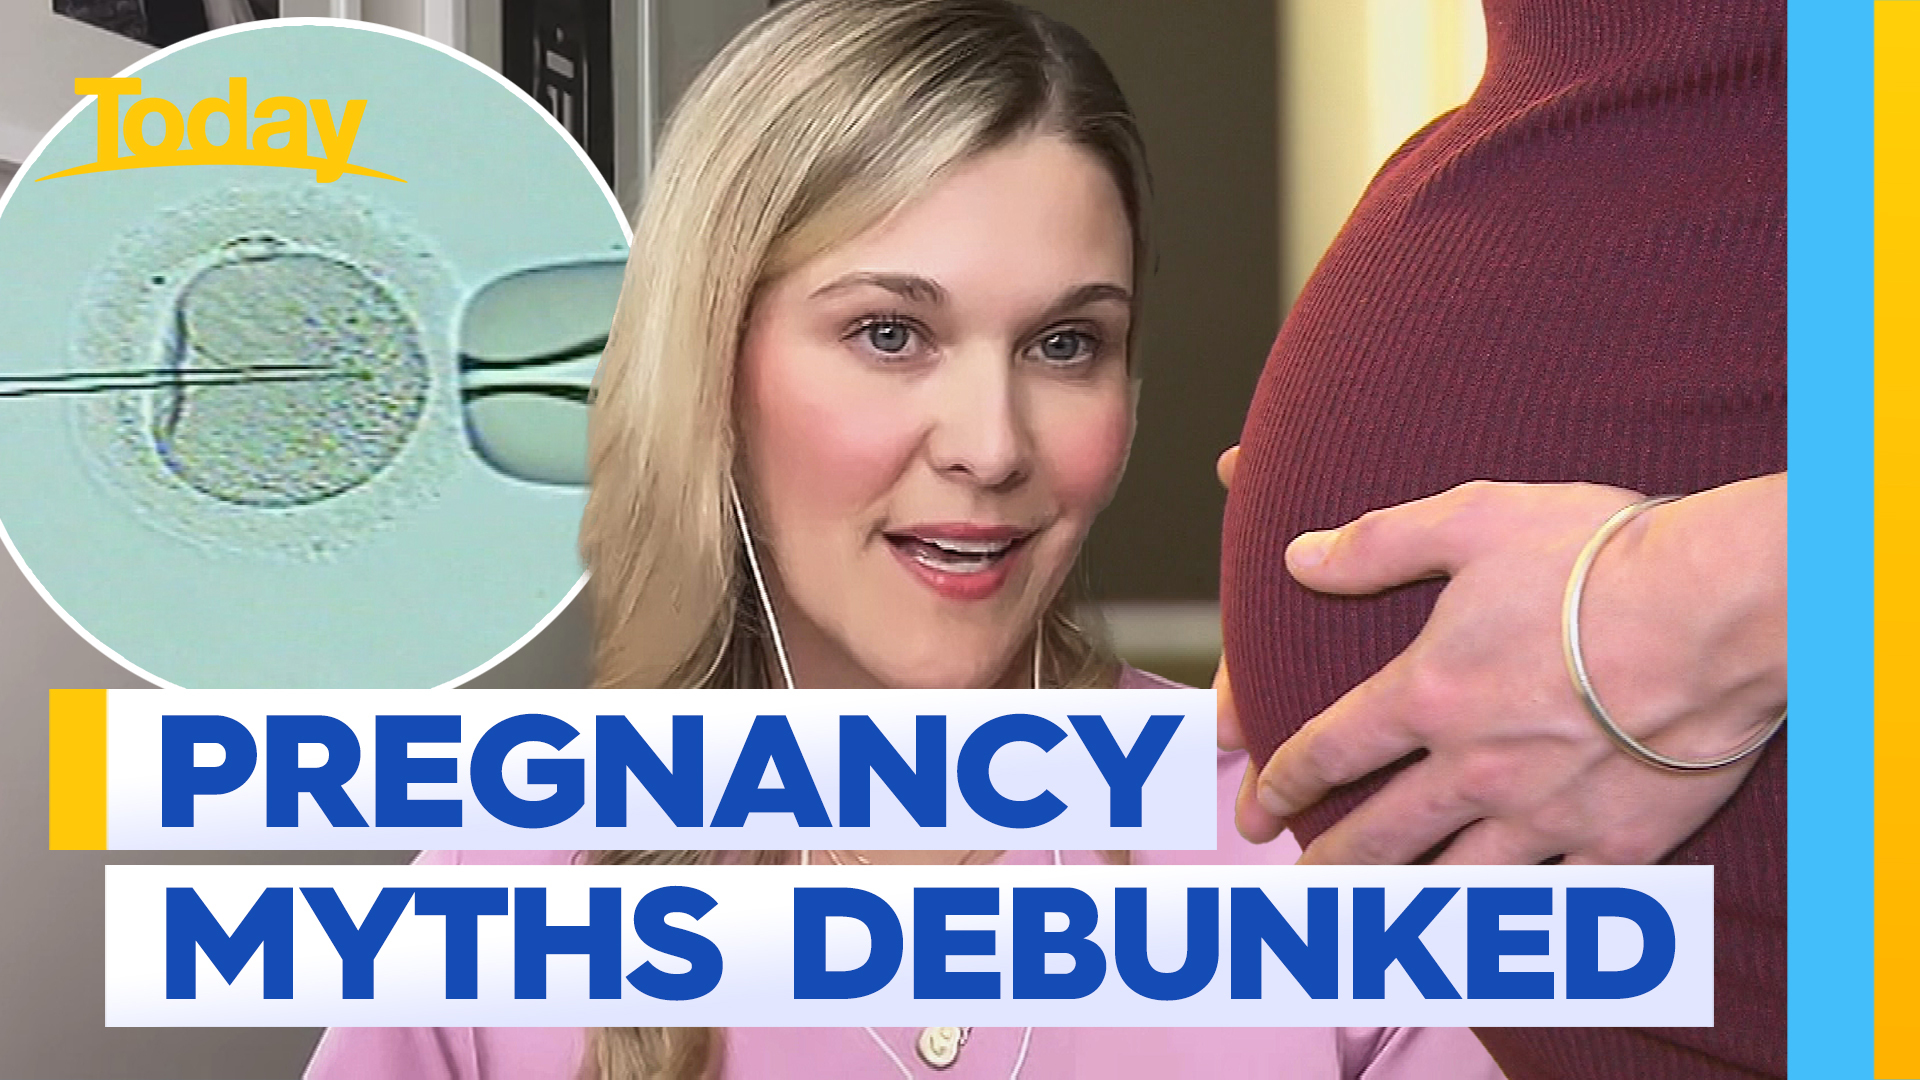 Pregnancy doctor debunks myths about conception